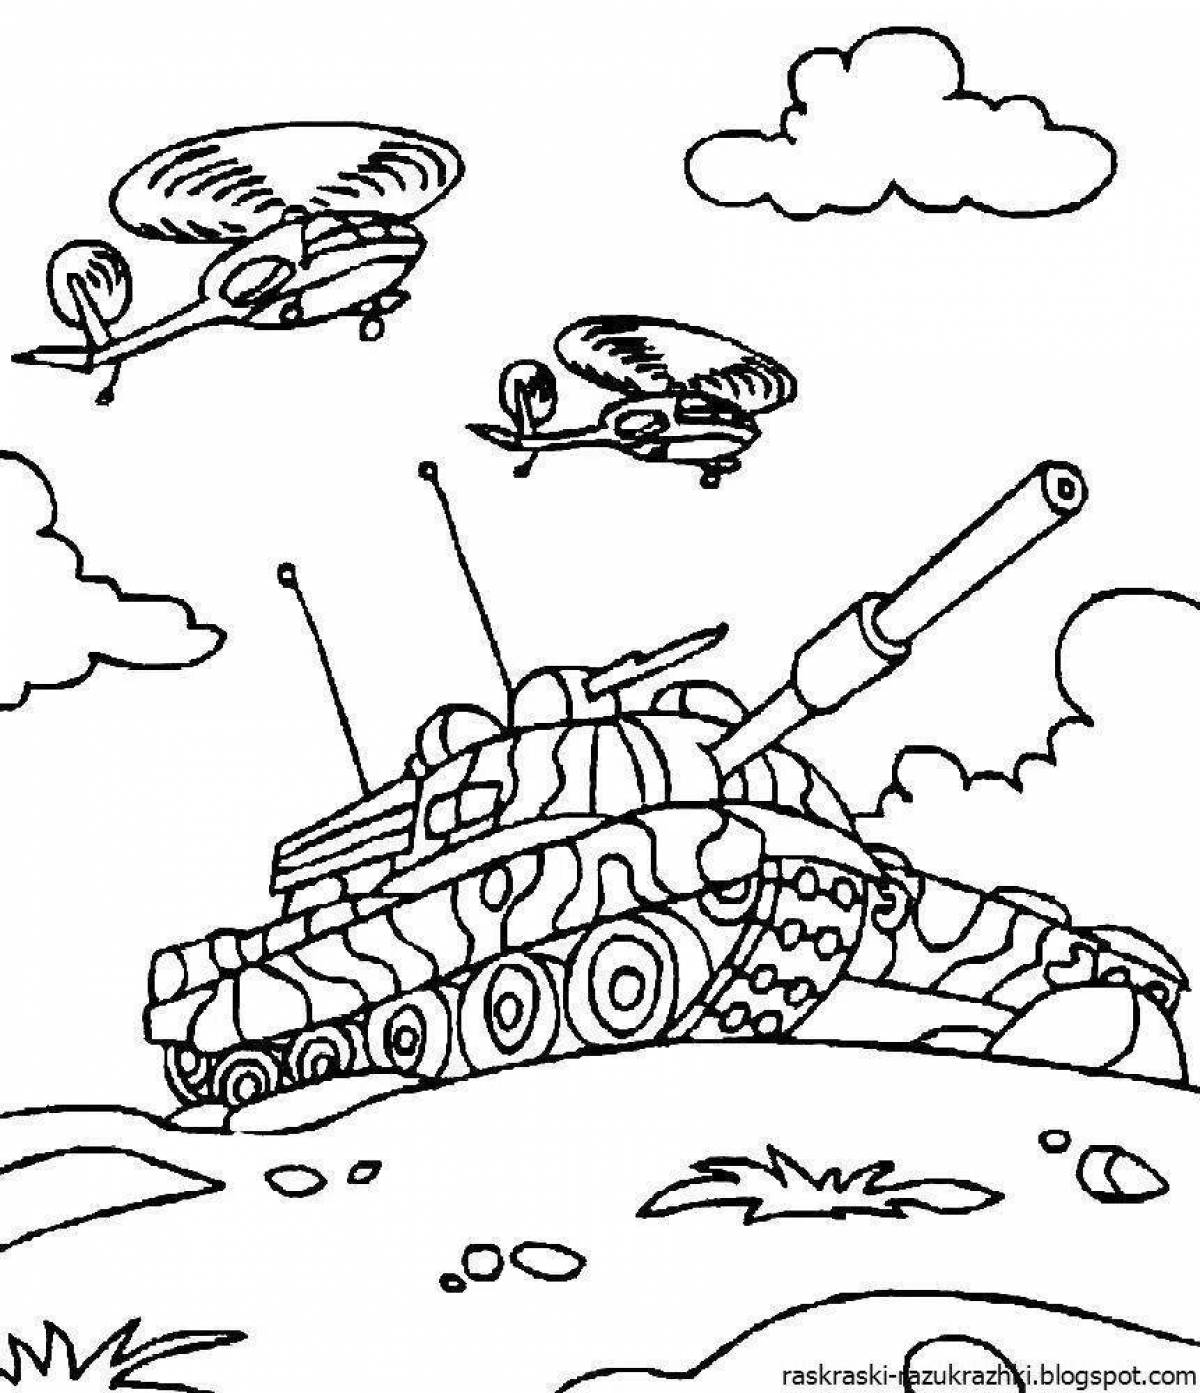 Relentless coloring war drawings